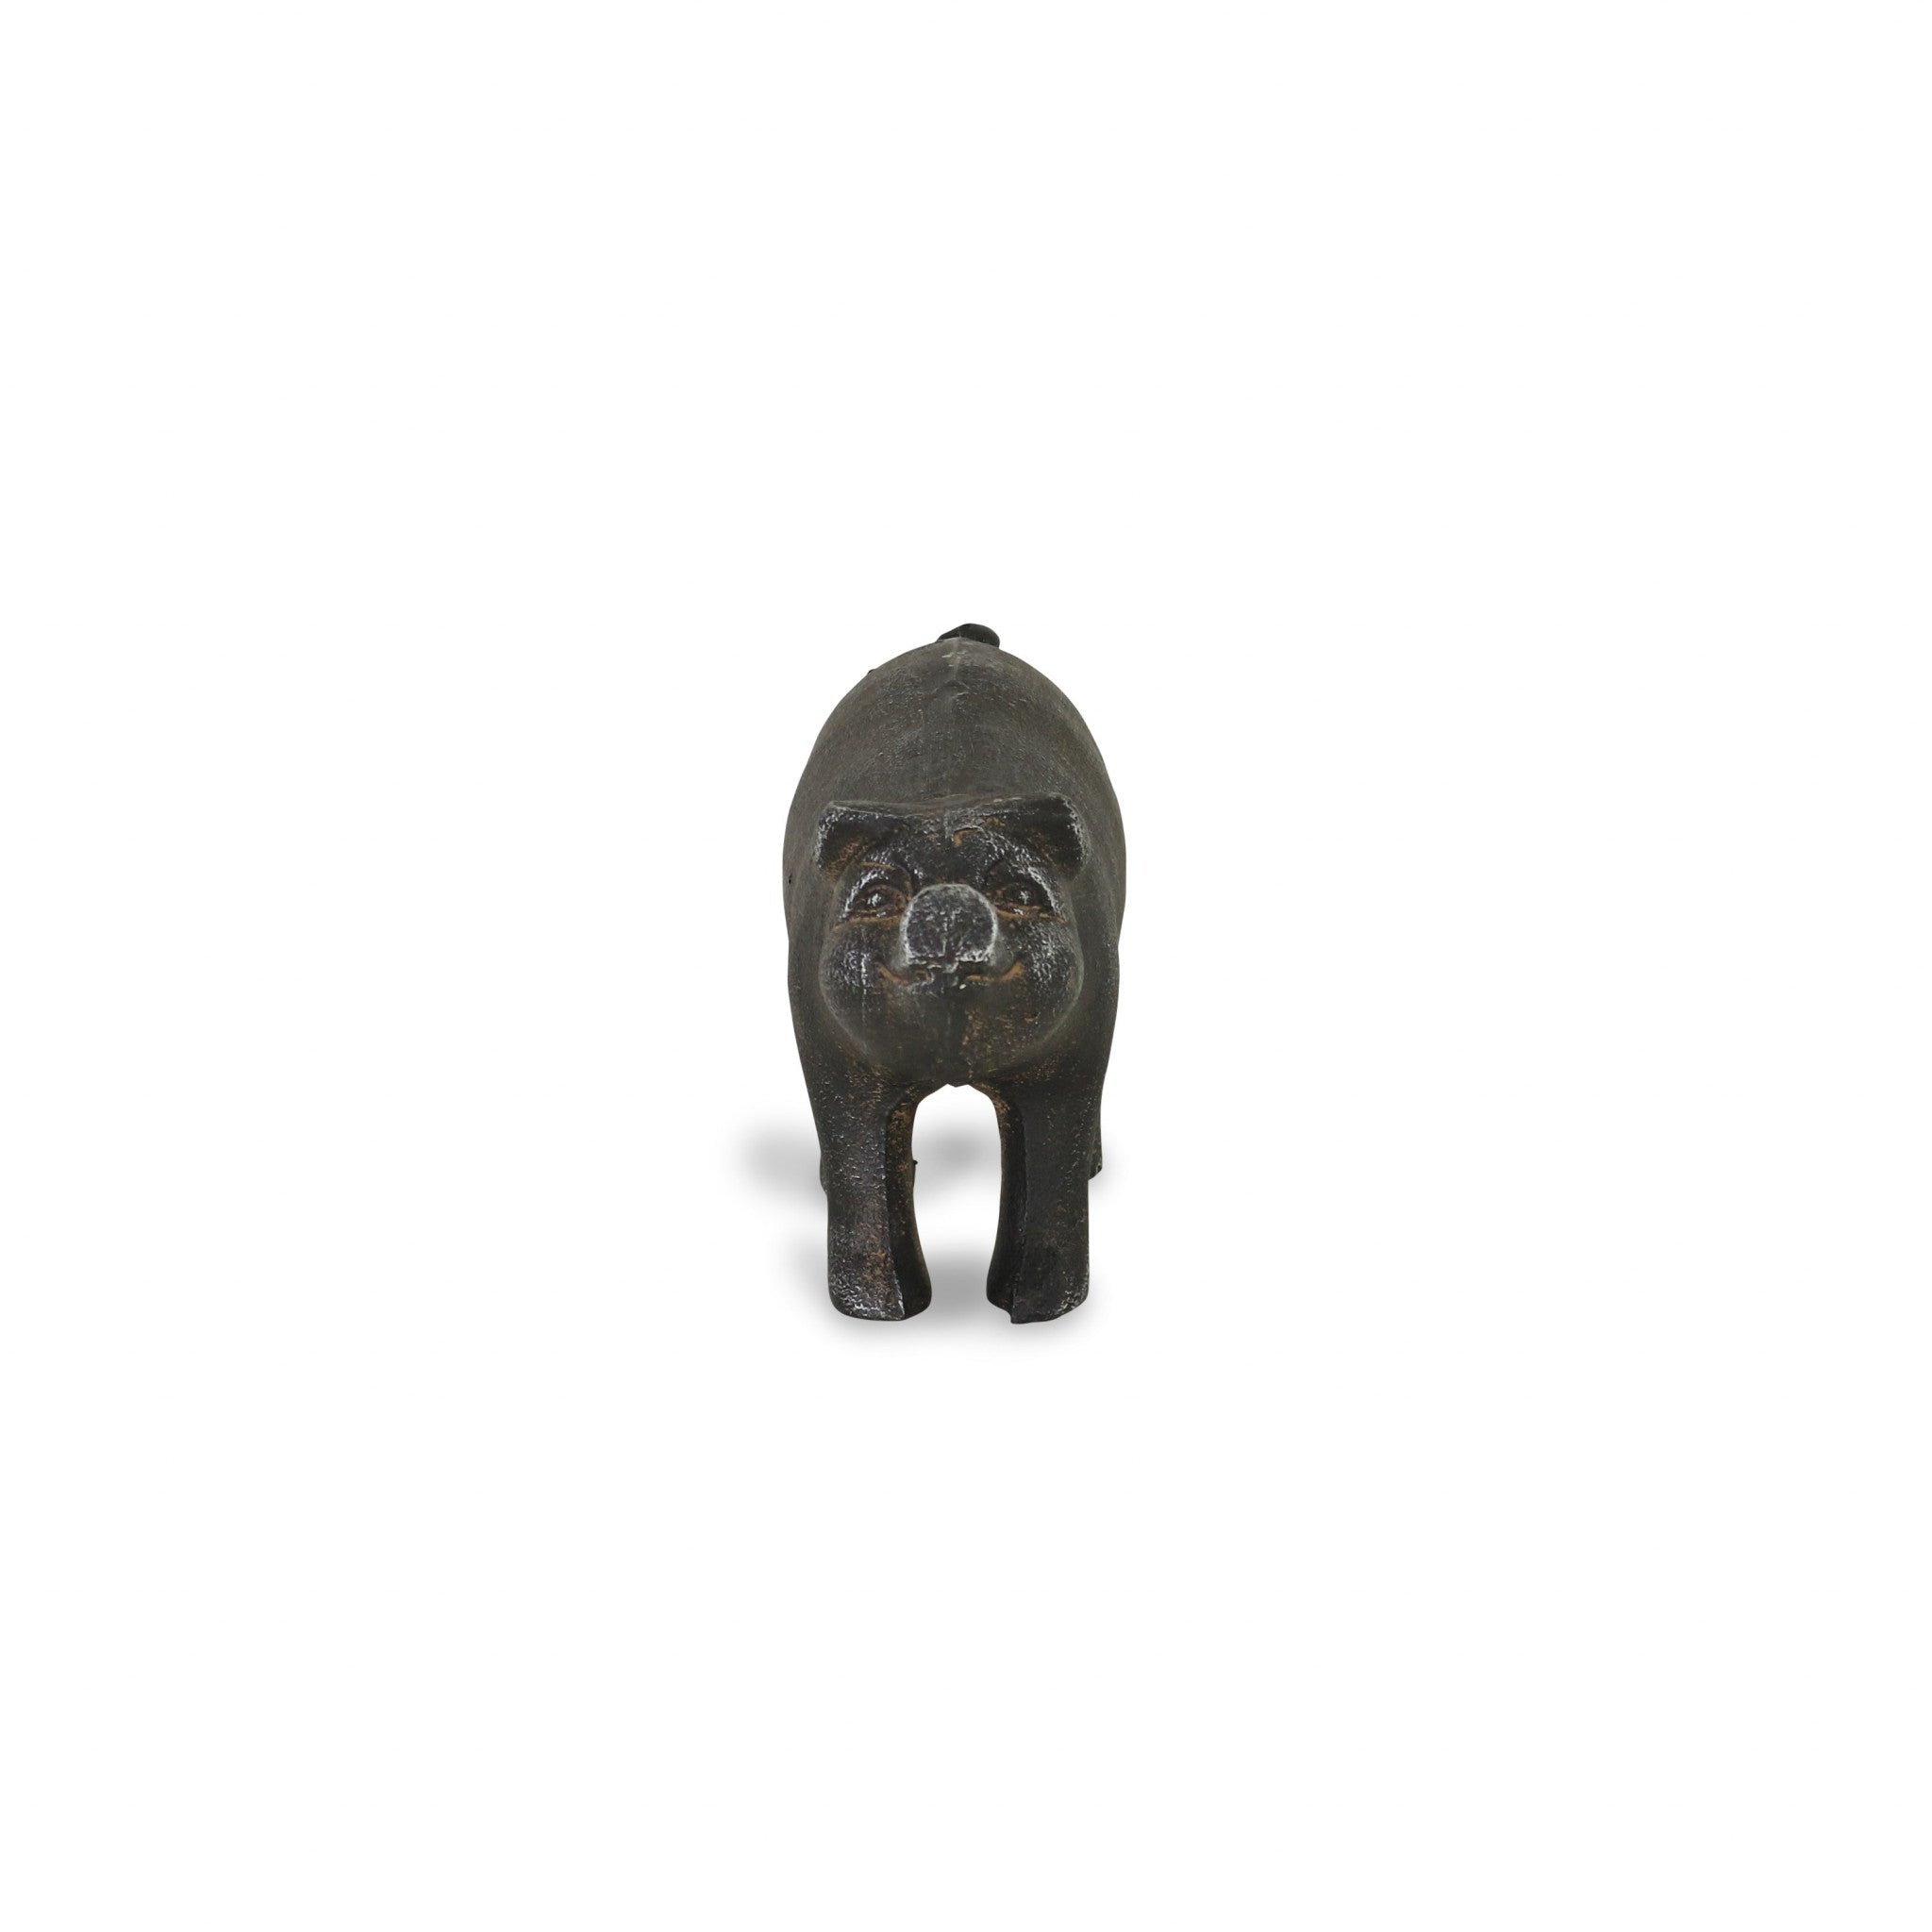 5" Black Cast Iron Pig Hand Painted Sculpture